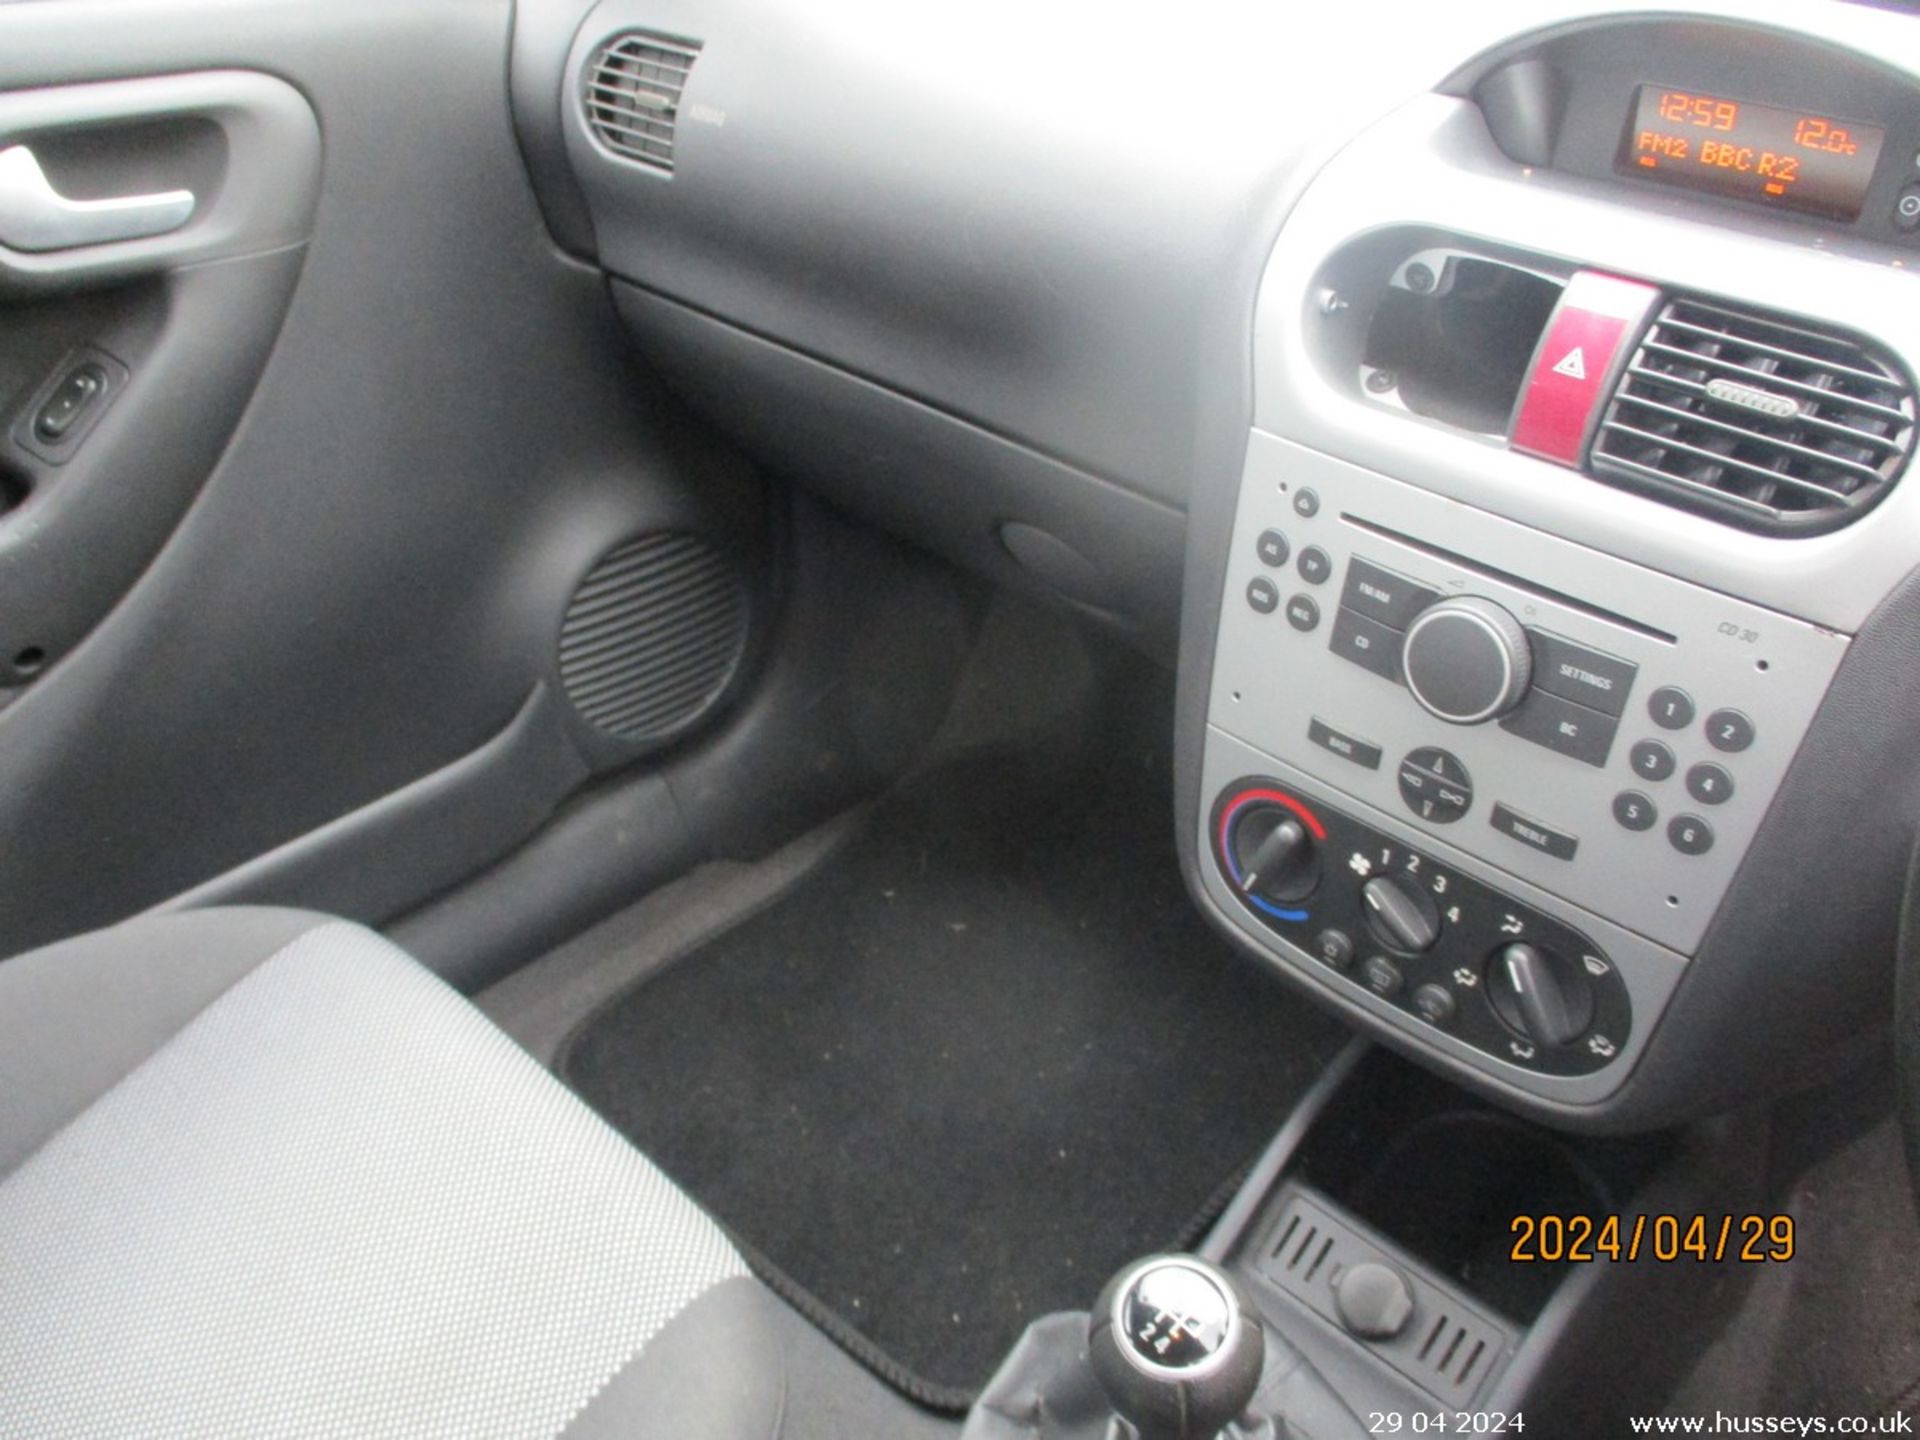 06/06 VAUXHALL CORSA DESIGN TWINPORT - 1229cc 5dr Hatchback (Black) - Image 16 of 19